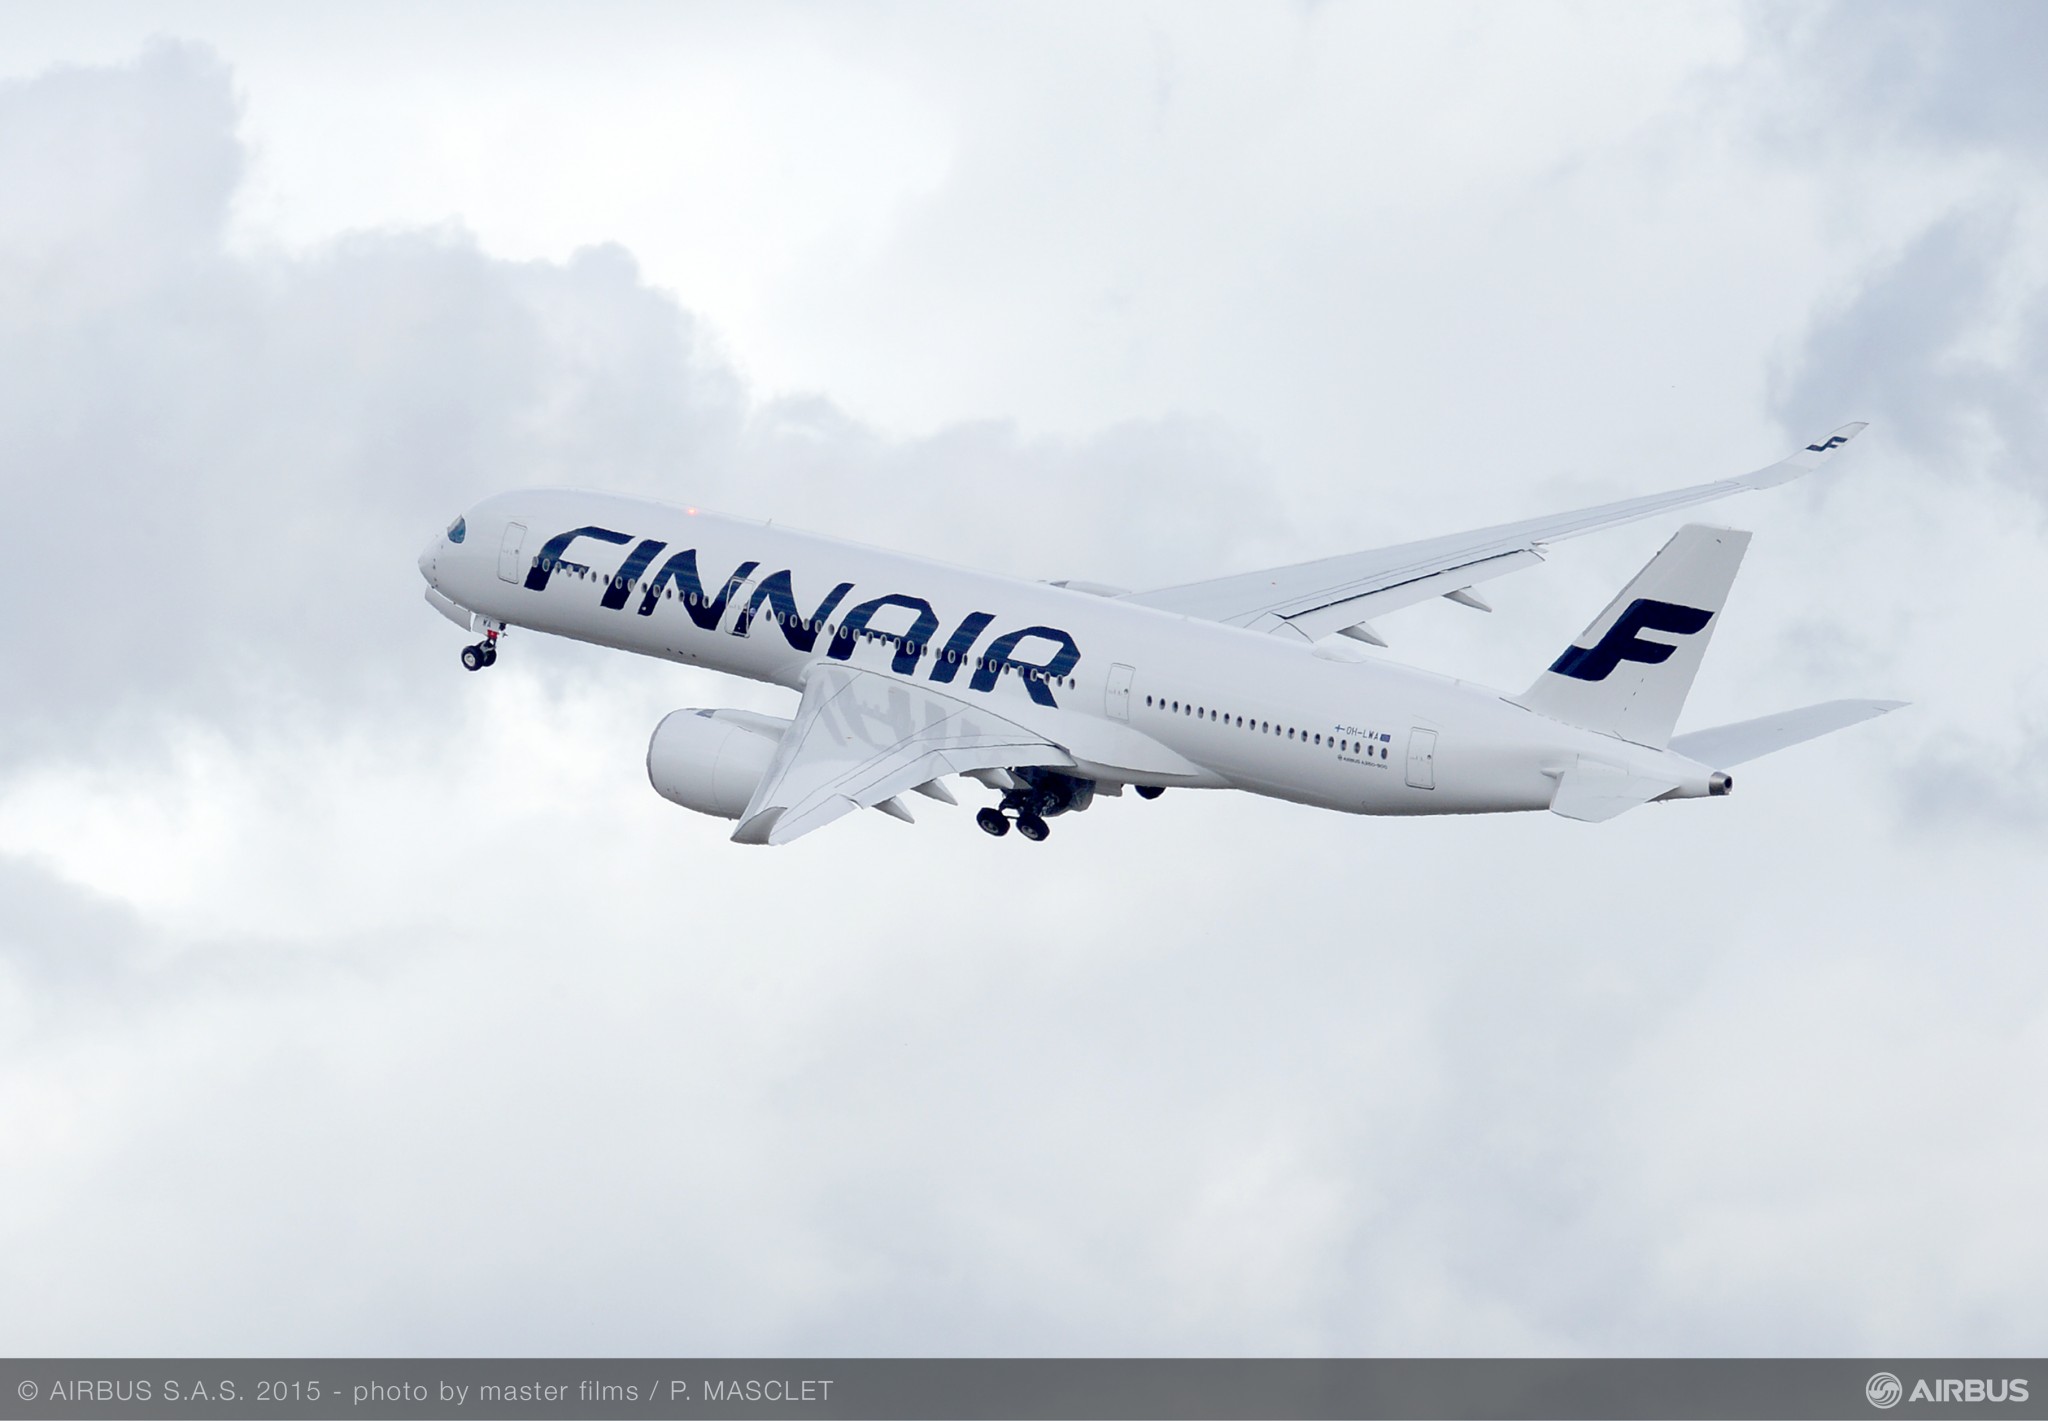 Finnair reports January traffic